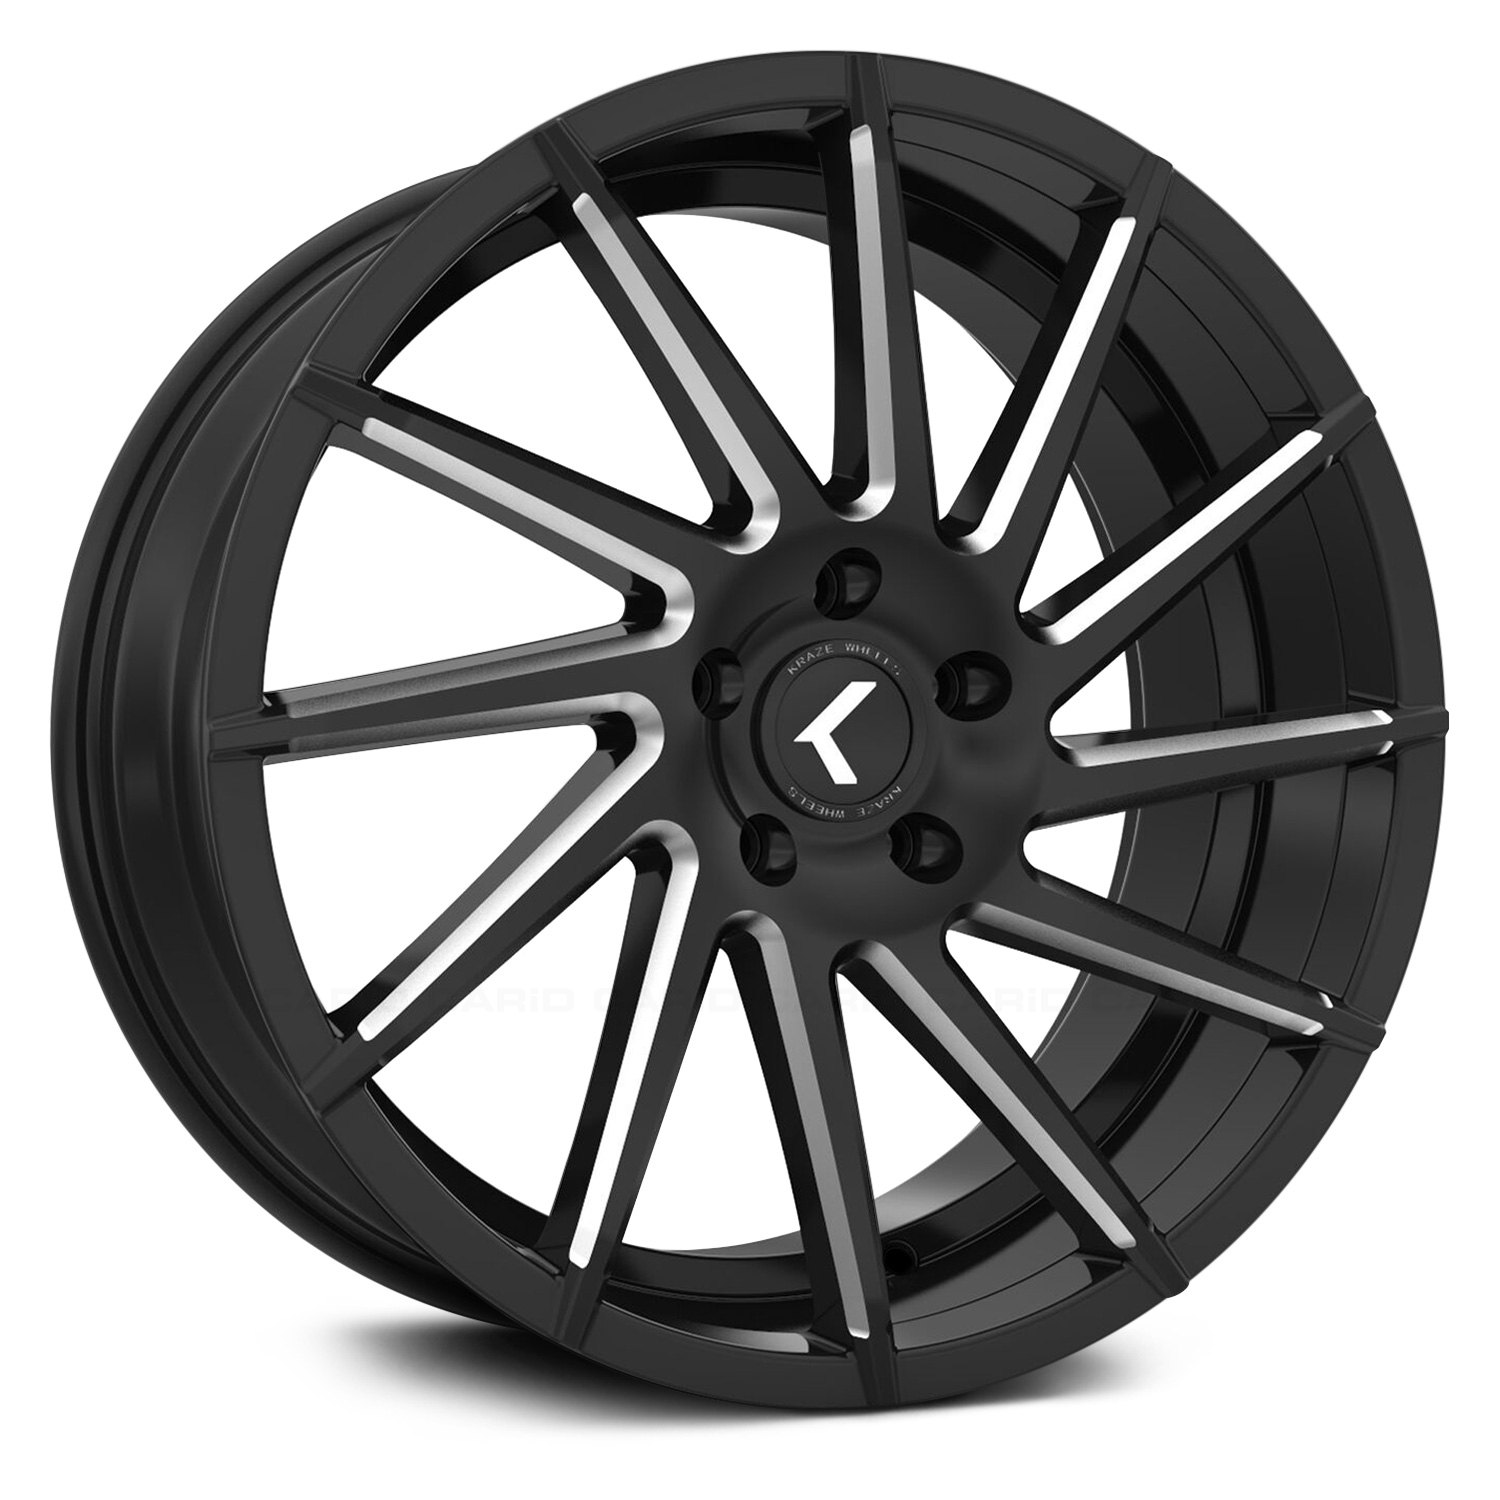 Kraze 181 SPINNER Wheel 20x8.5 (40, 5x120.65, 74.1) Black Single Rim.